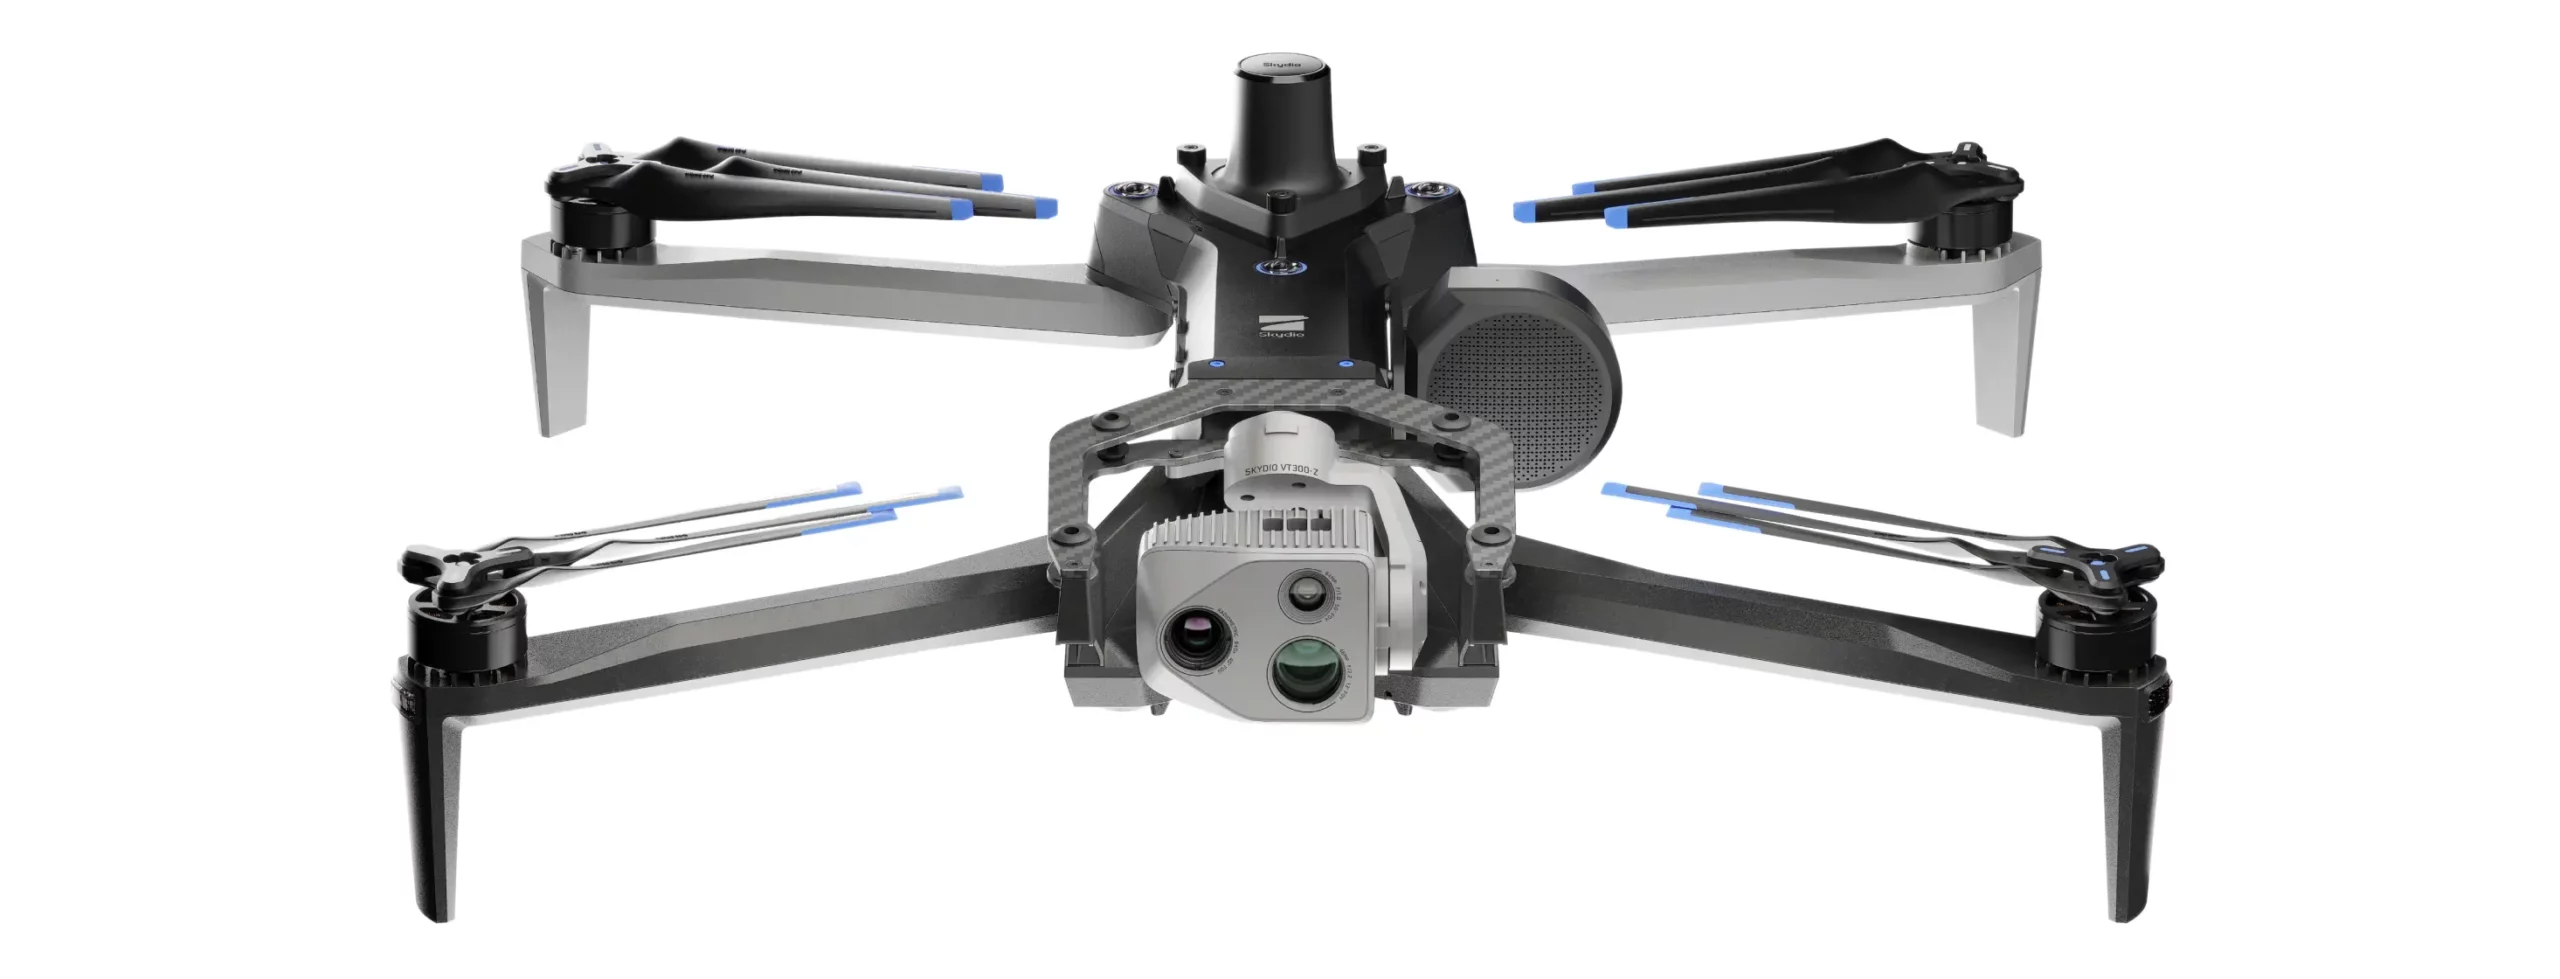 Skydio X10, Skydio new drone, Skydio big announcement